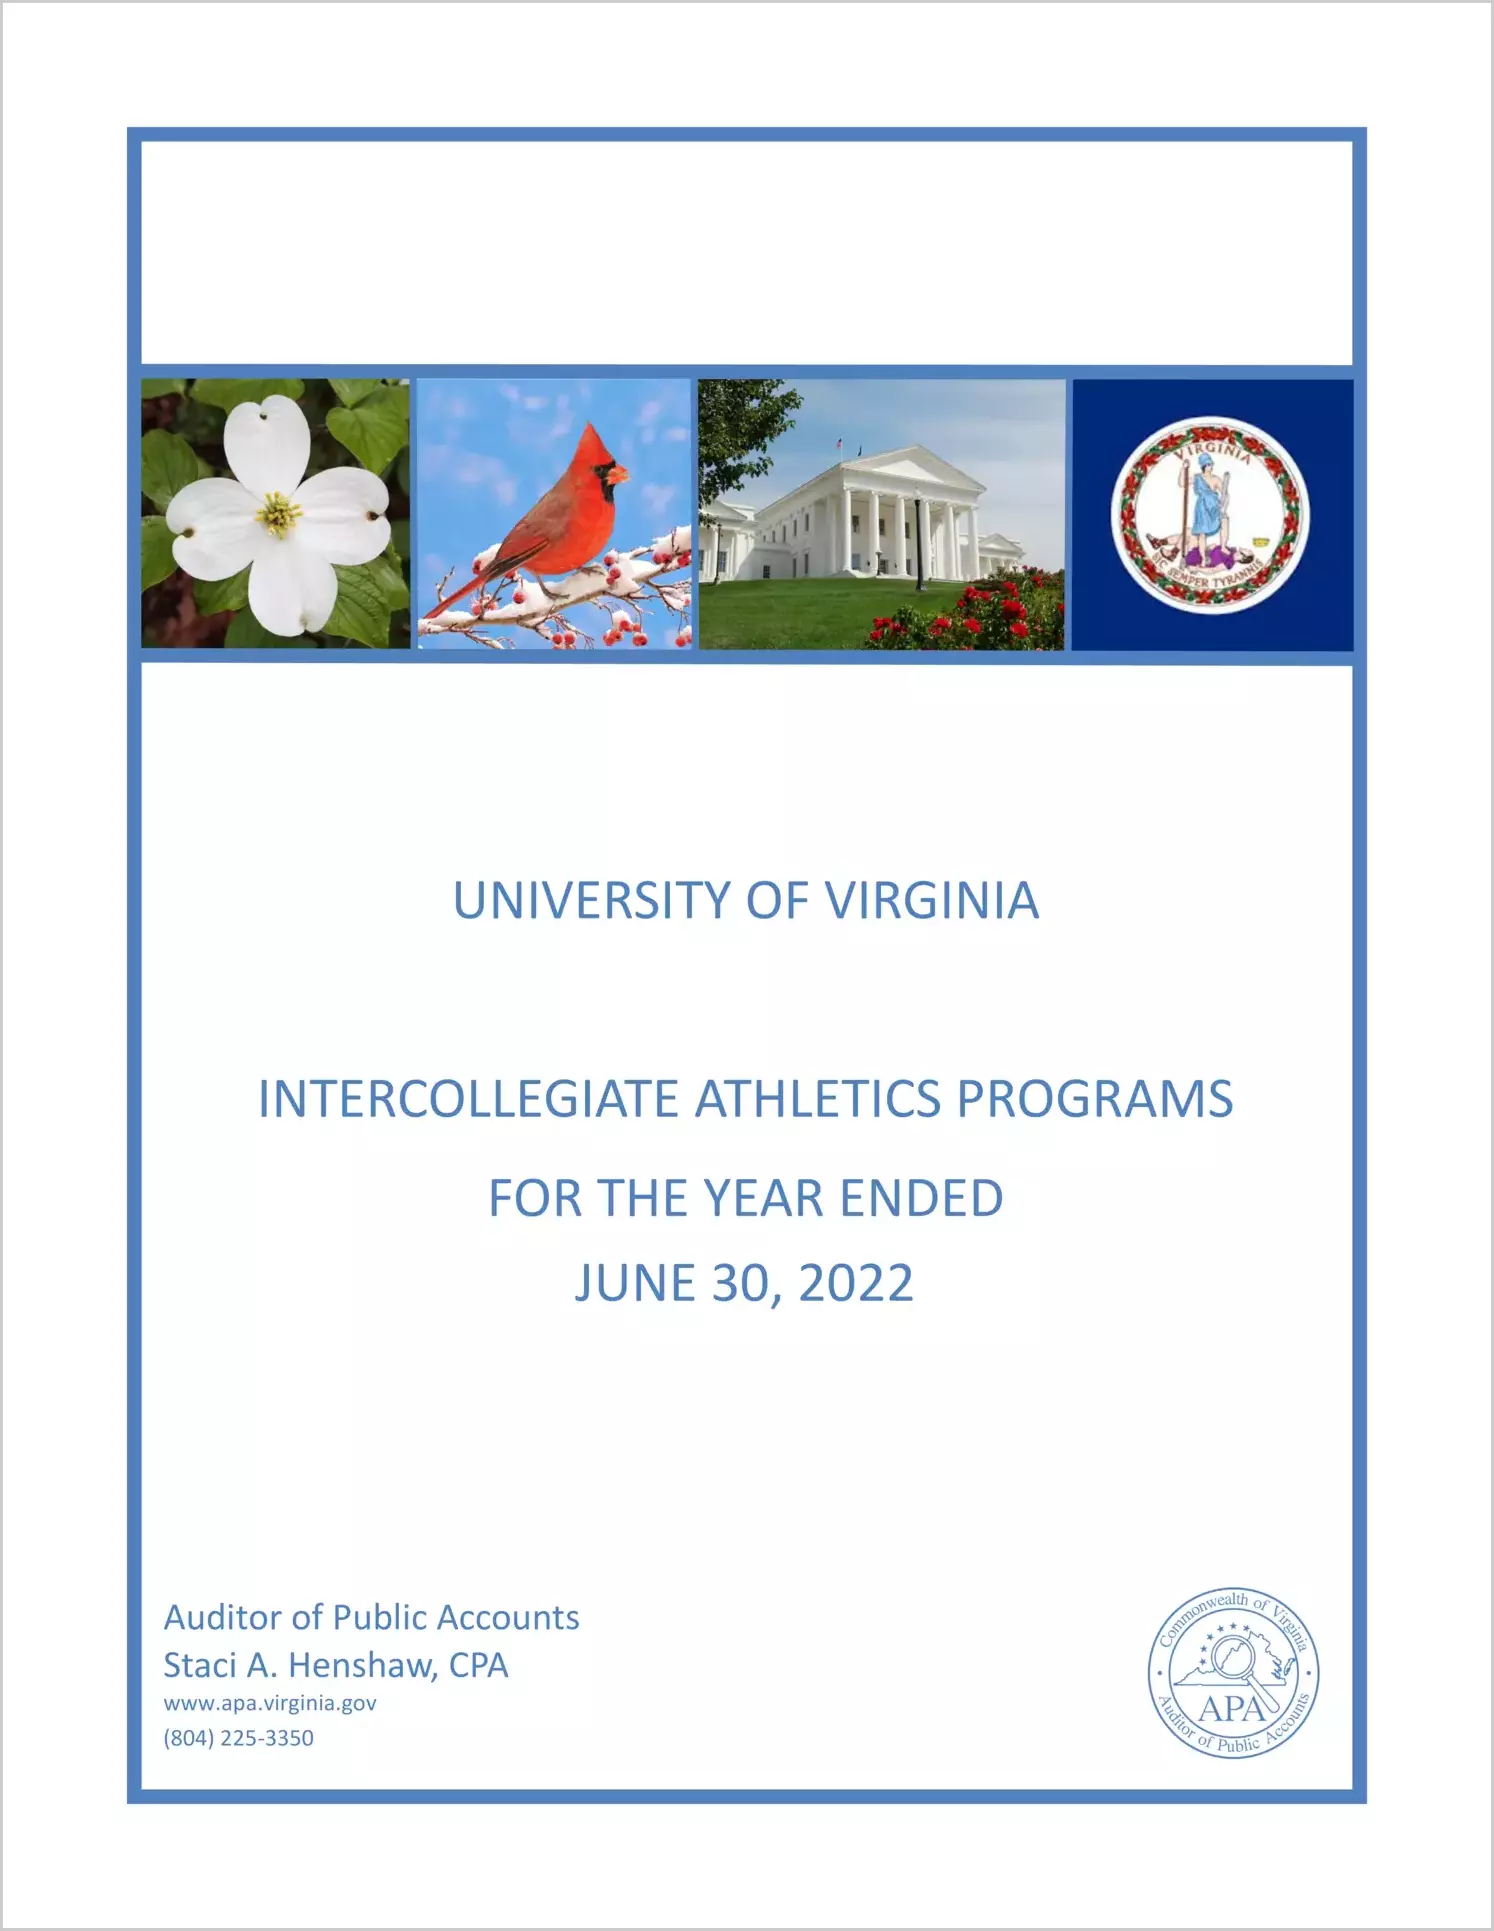 University of Virginia Intercollegiate Athletics Programs for the year ended June 30, 2022